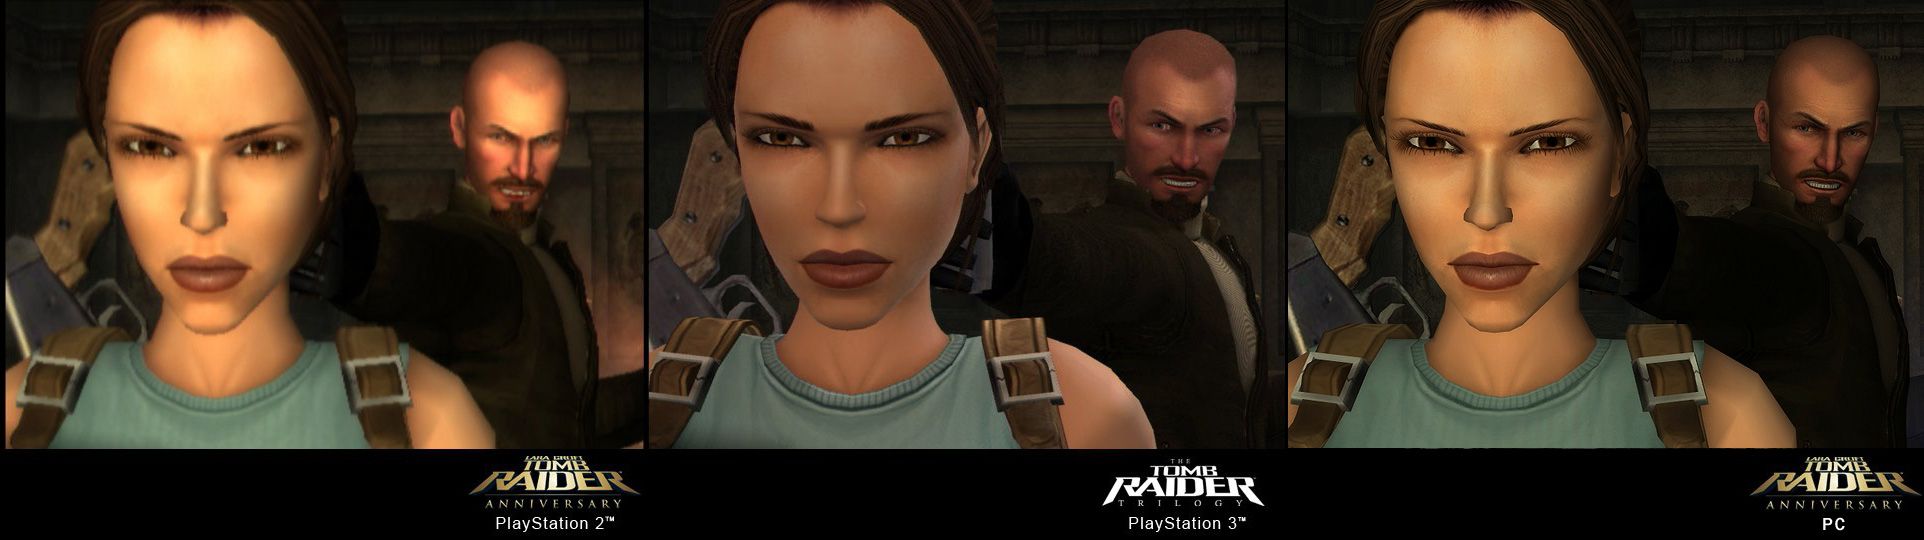 Tomb Raider Trilogy - Image 7